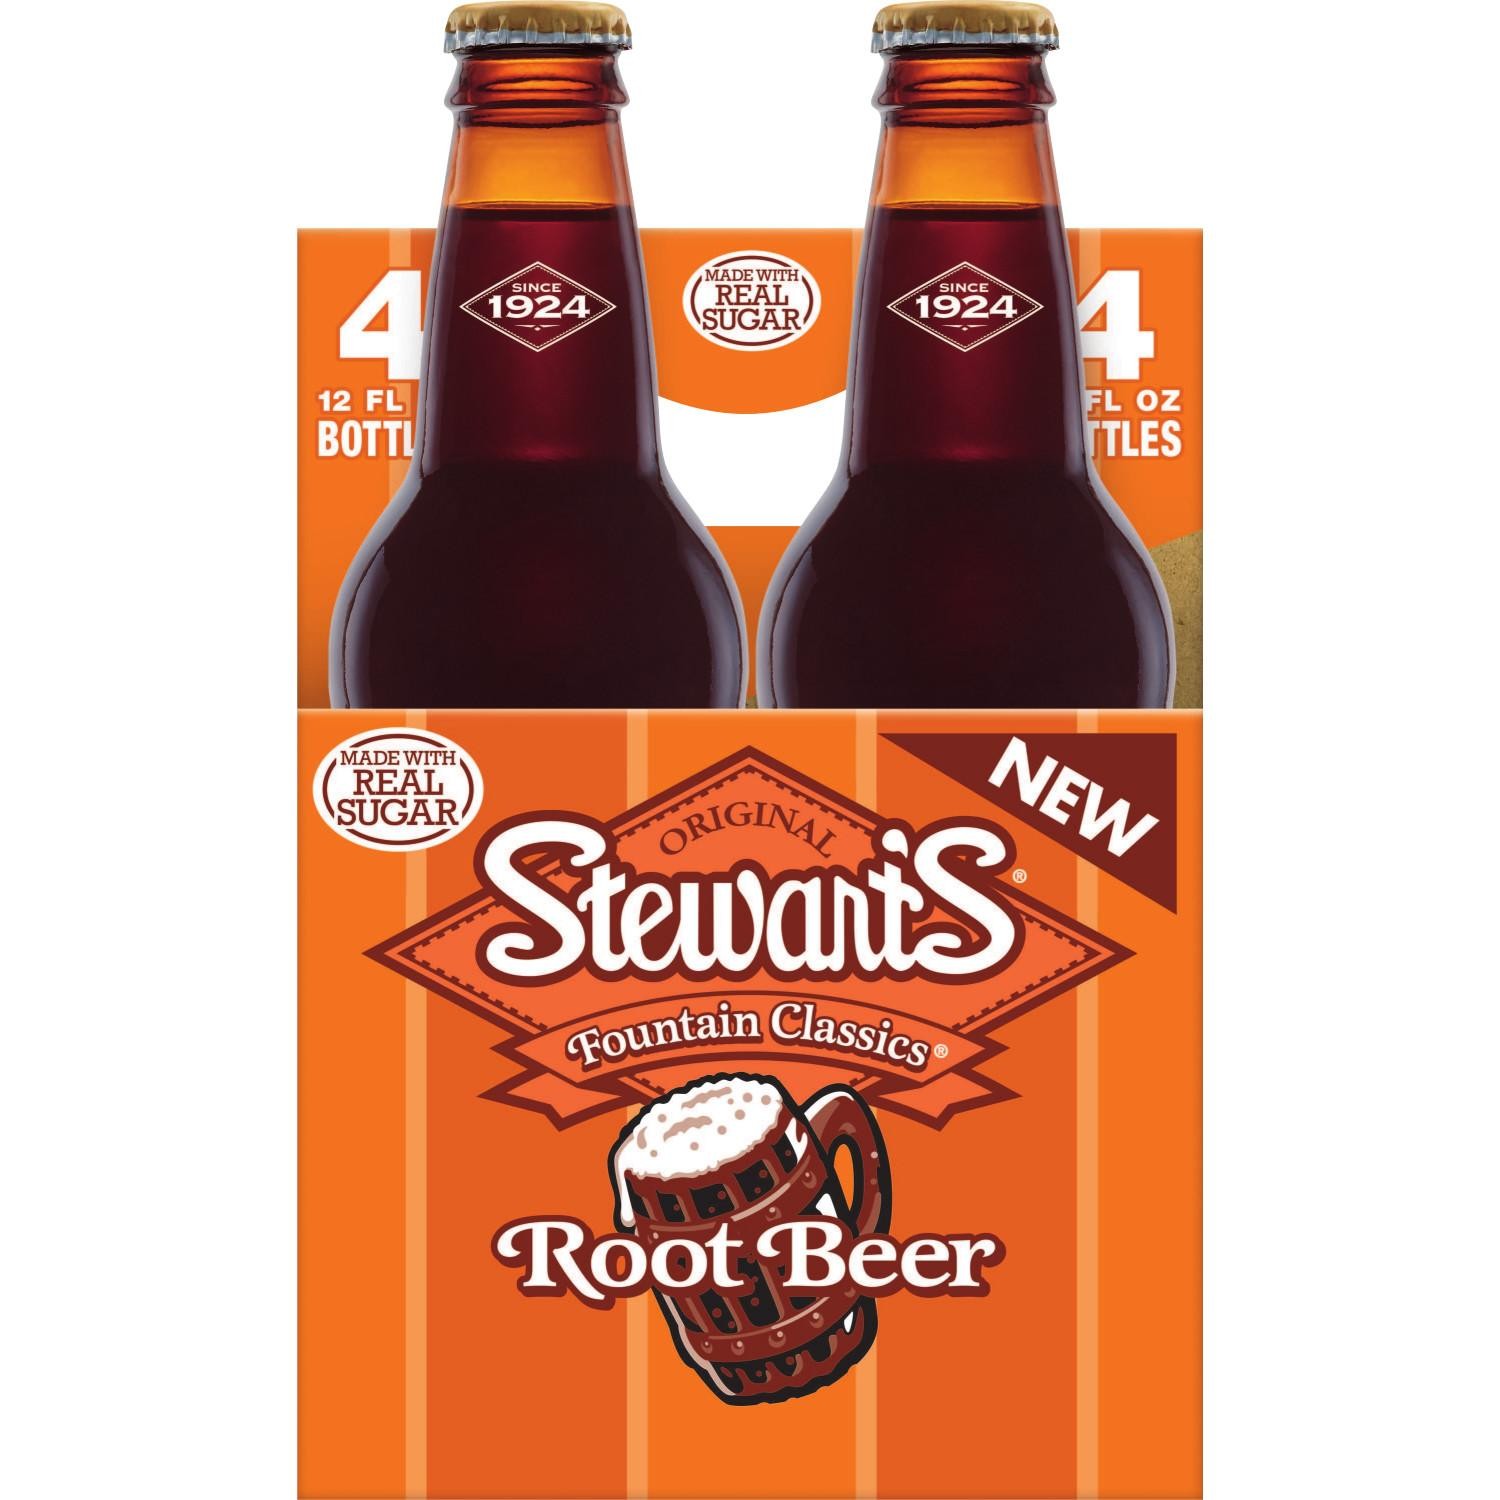 Stewart's Root Beer Made with Sugar, 12 Fl Oz, 4 Pack